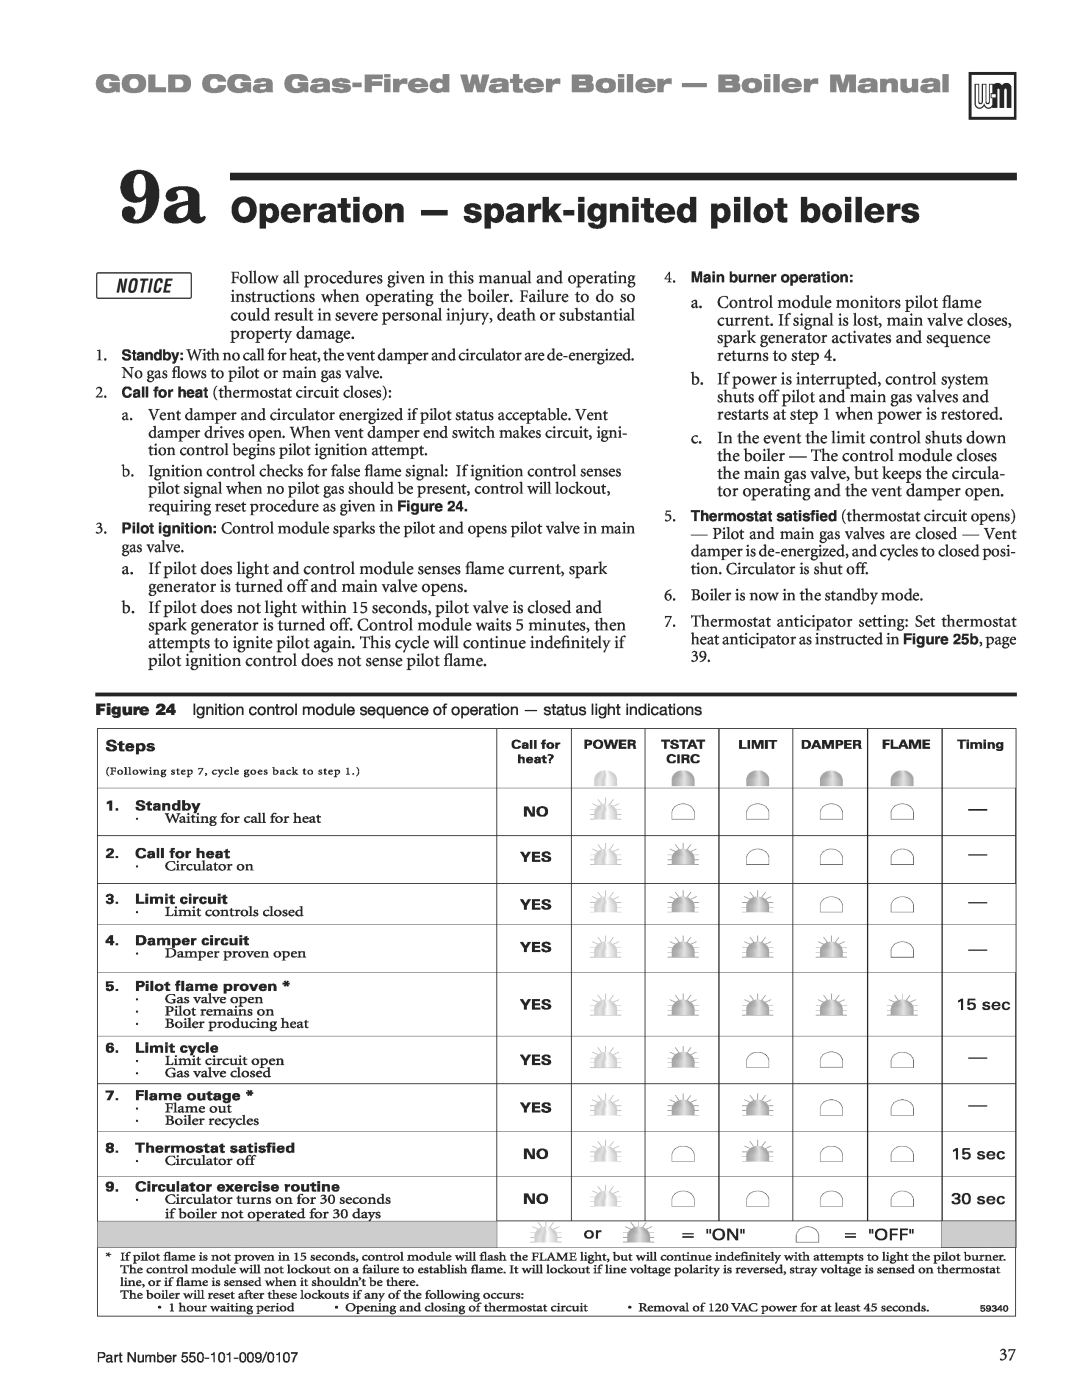 Weil-McLain CGA25SPDN manual 9a Operation - spark-ignitedpilot boilers, GOLD CGa Gas-FiredWater Boiler - Boiler Manual 